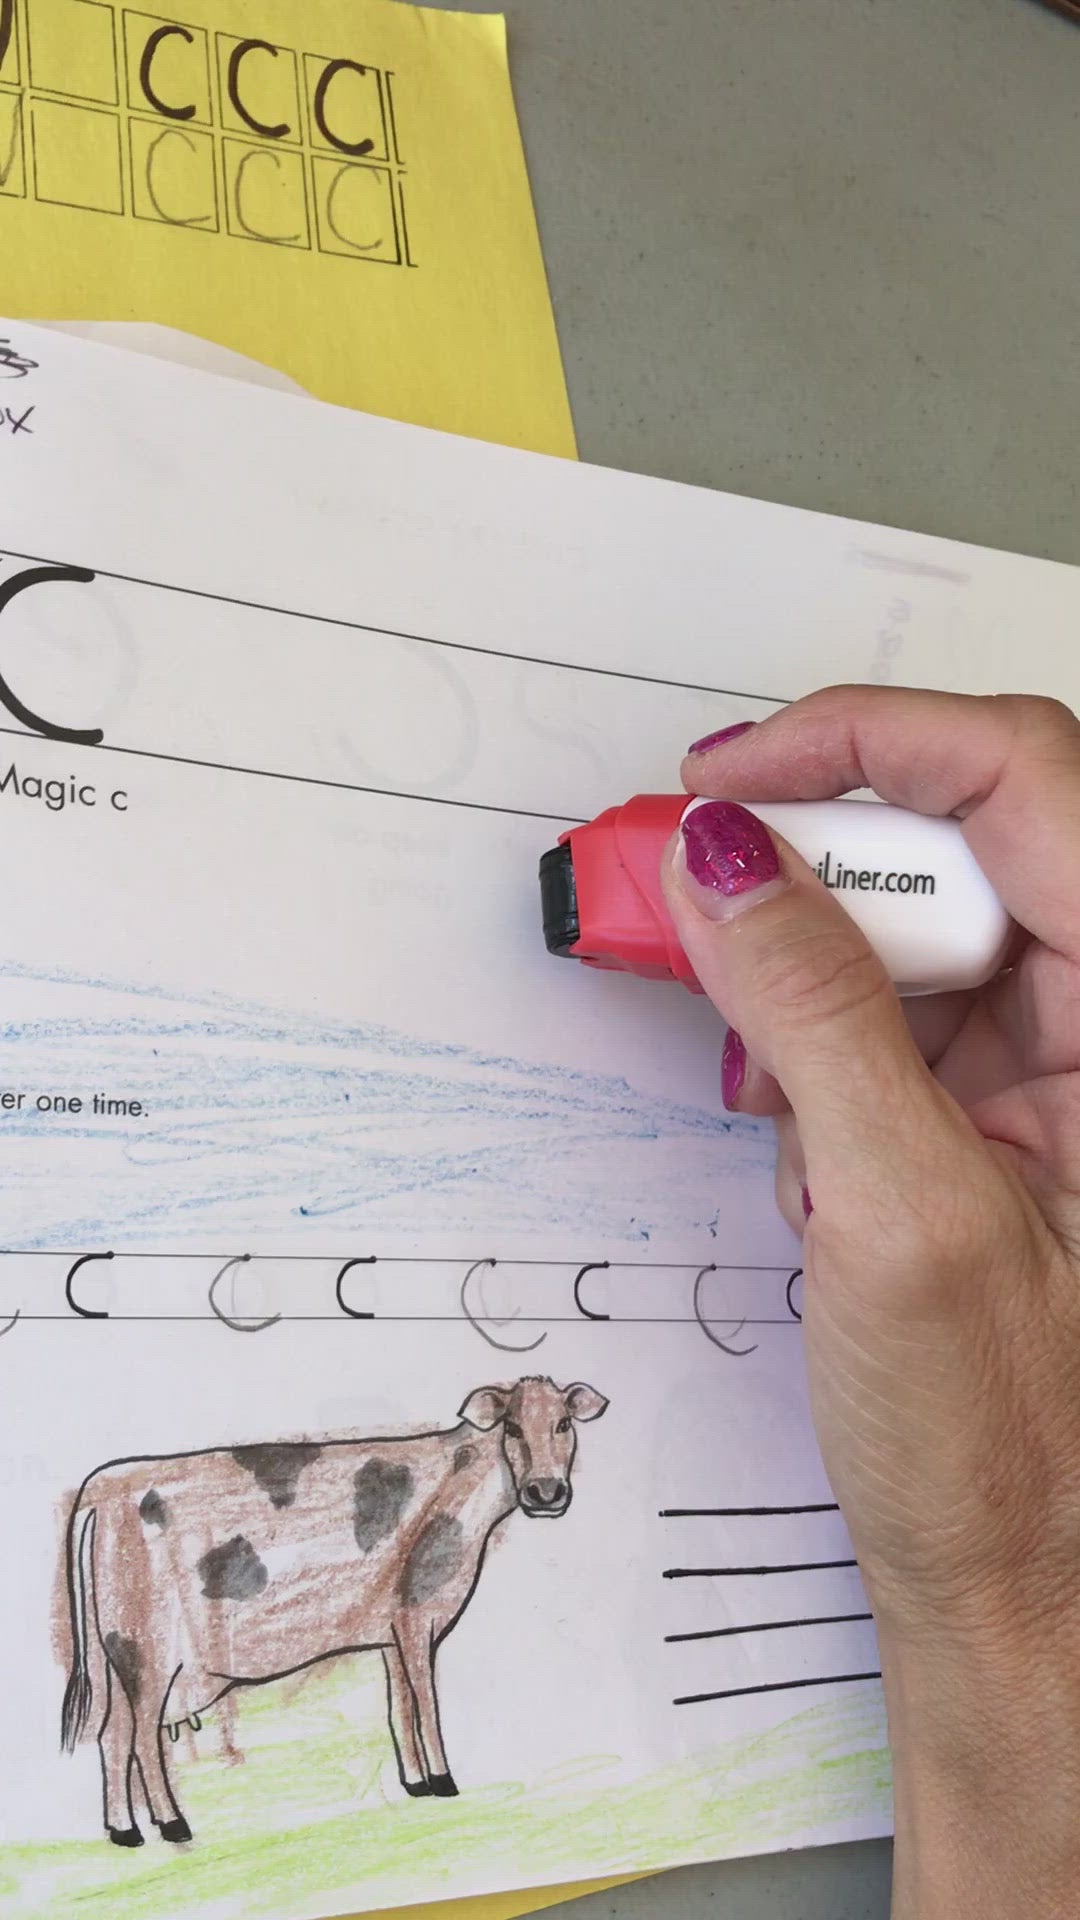 LegiLiner Self-Inking Teacher Stamps & Handwriting Lines Roller Stamps